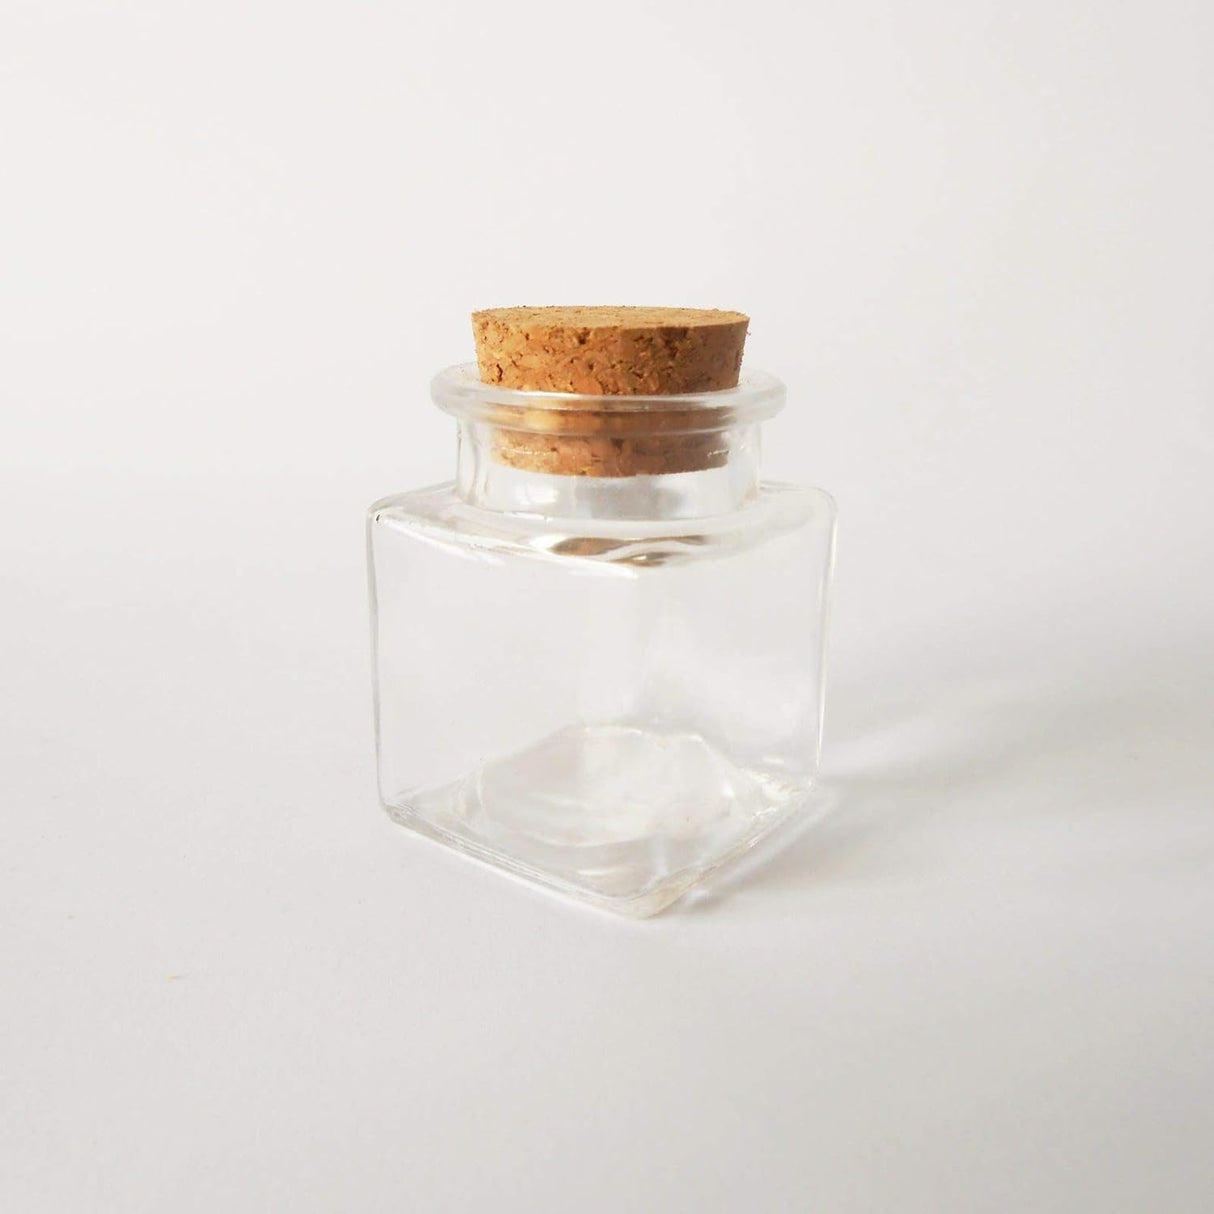 48 x Square Glass Jar with Cork Stopper 4x4x4 cm